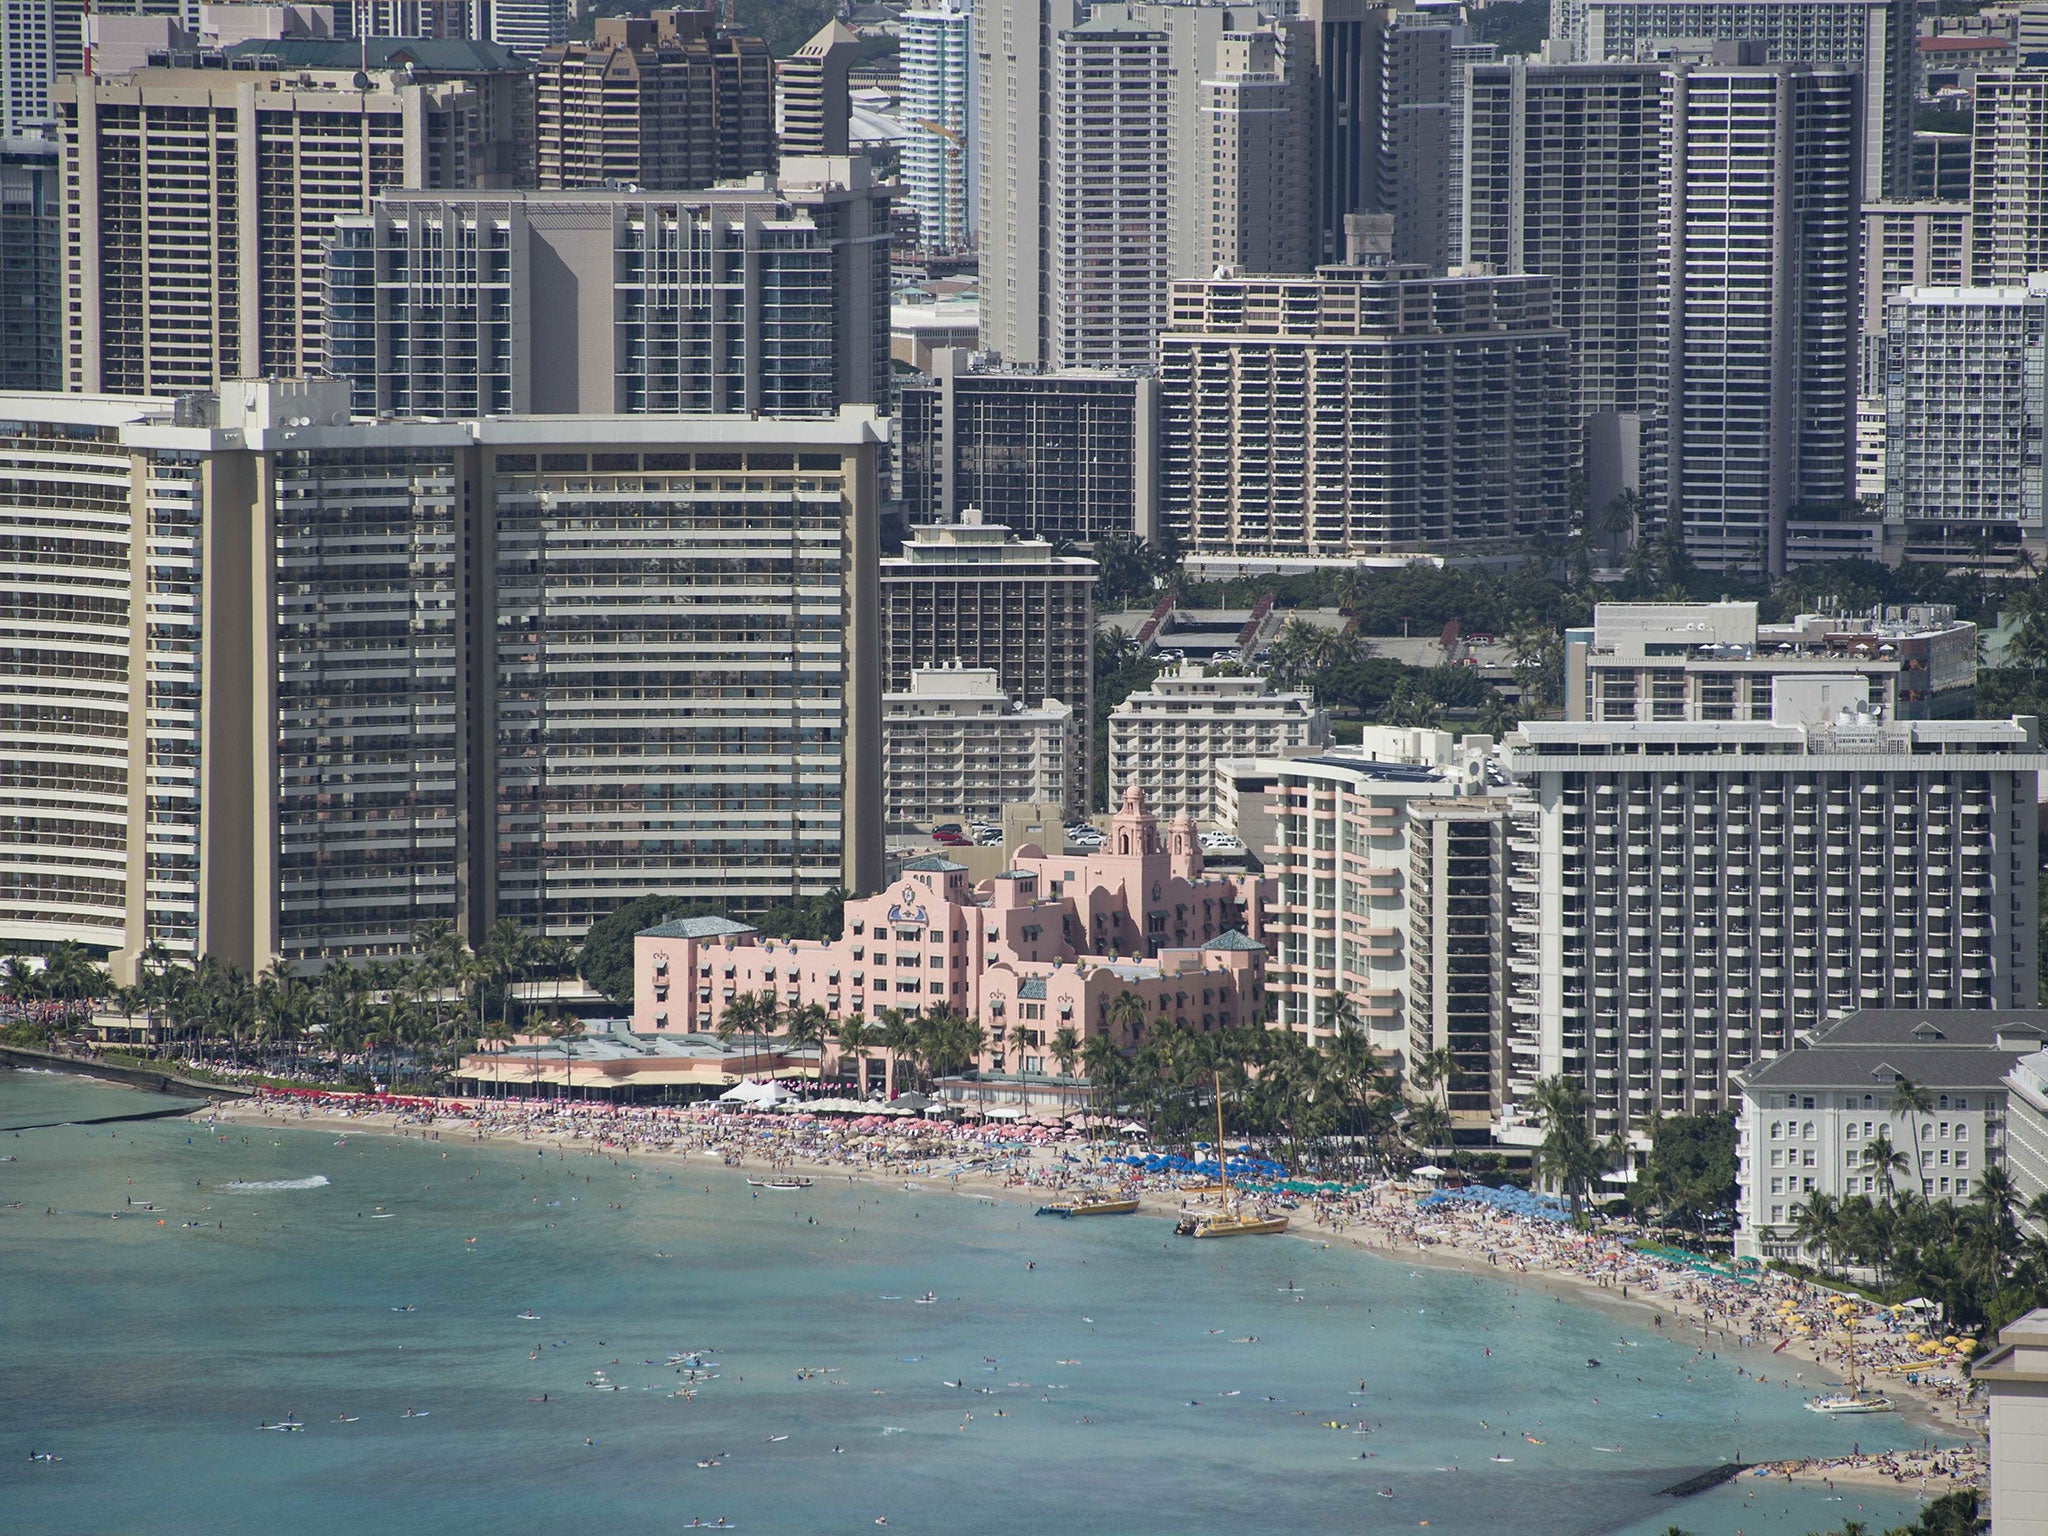 Waikiki beach in Honolulu suffers from coastal erosion